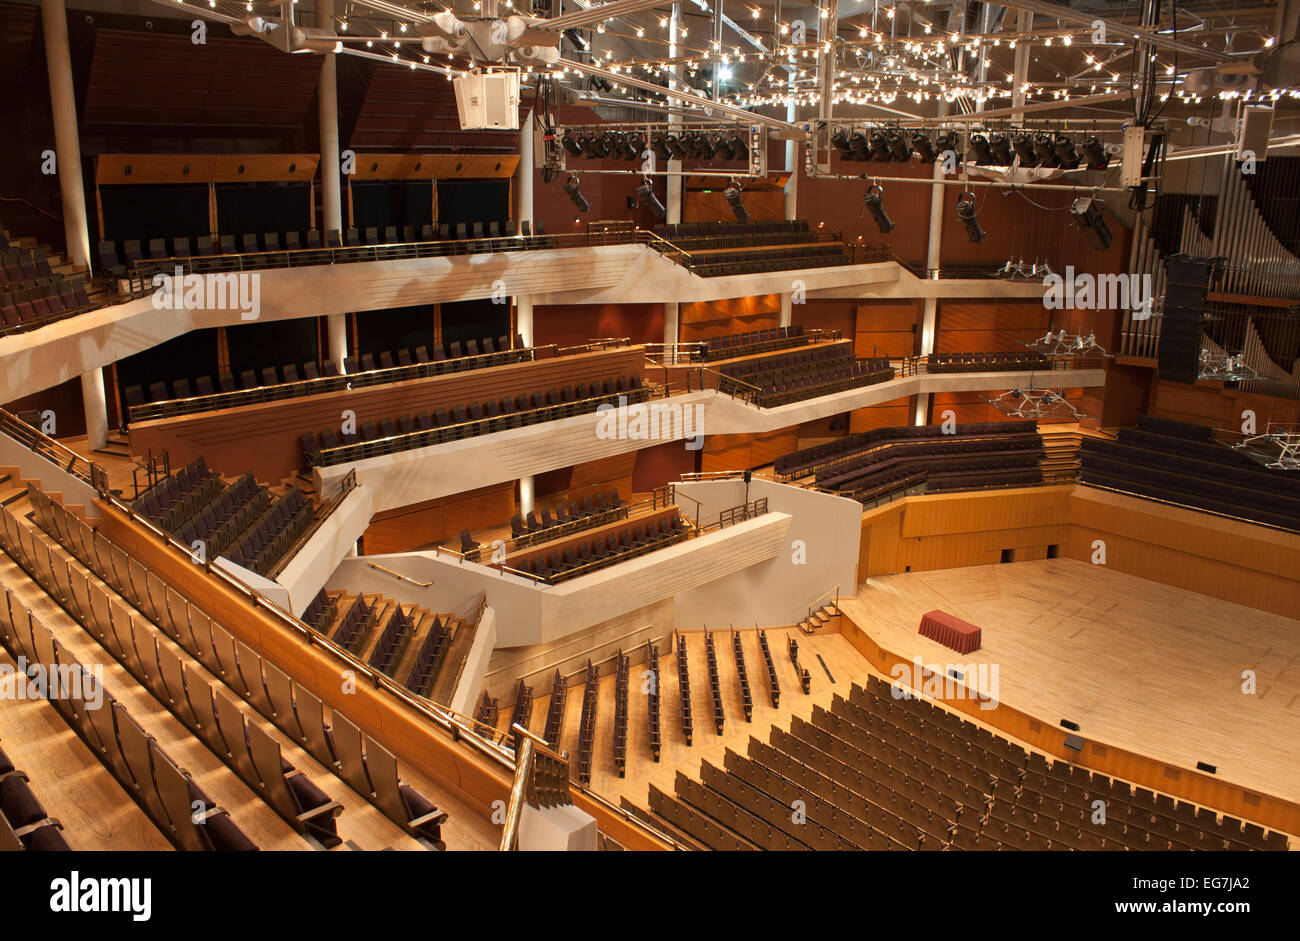 Auditorium at the Bridgewater Hall concert venue in Manchester, UK. Stock Photo